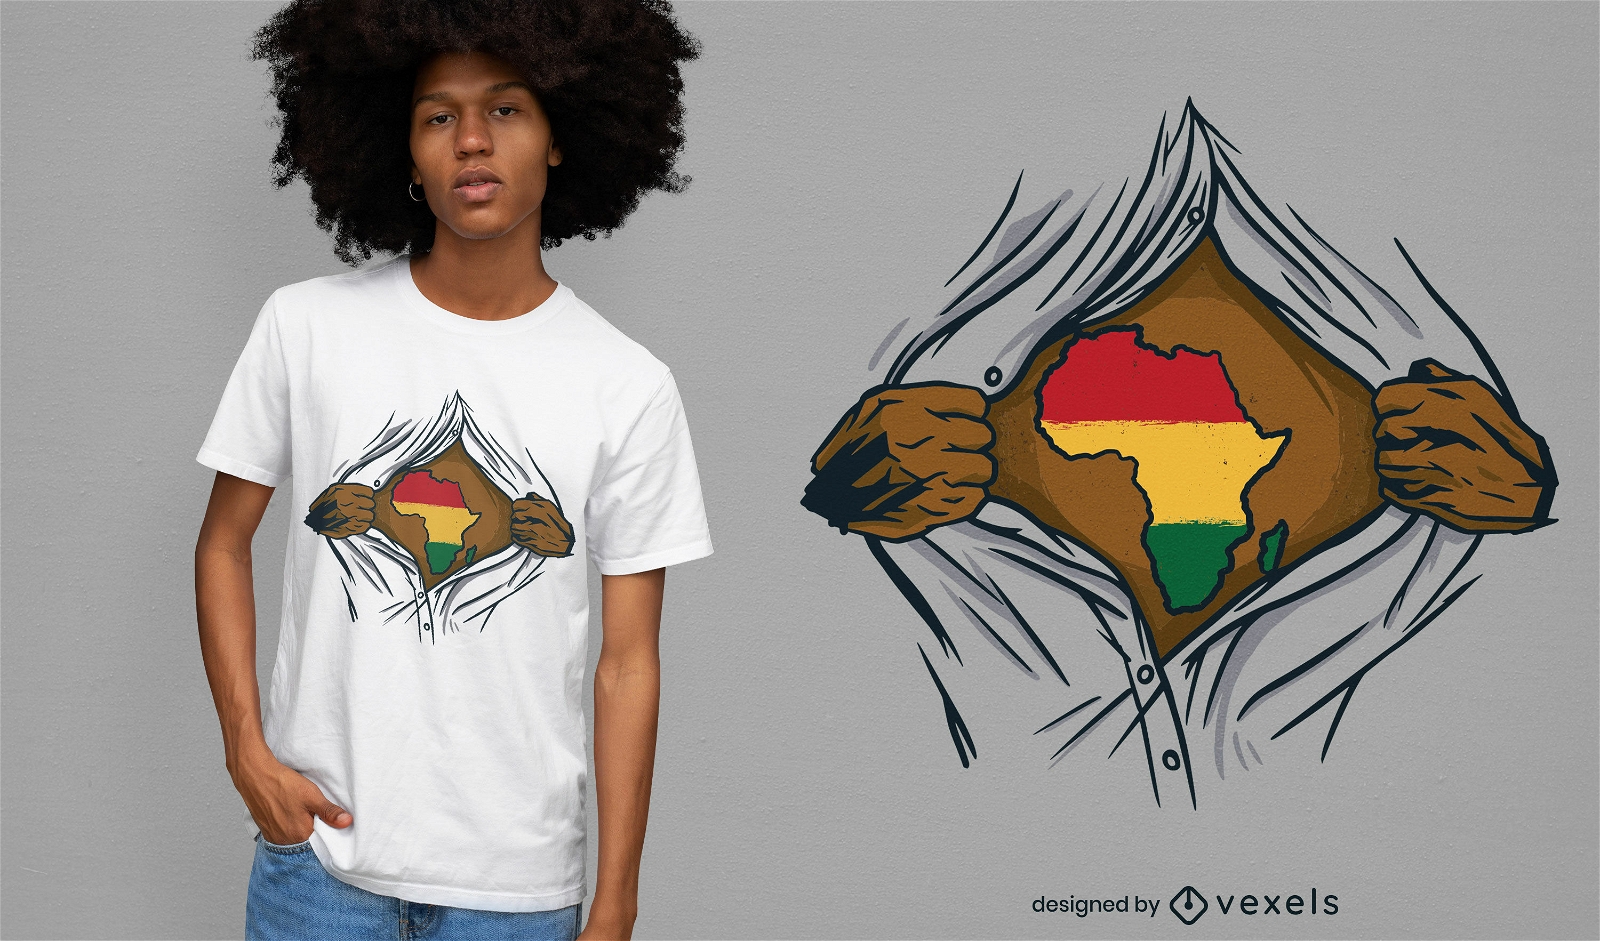 Afrika riss offenes T-Shirt-Design auf